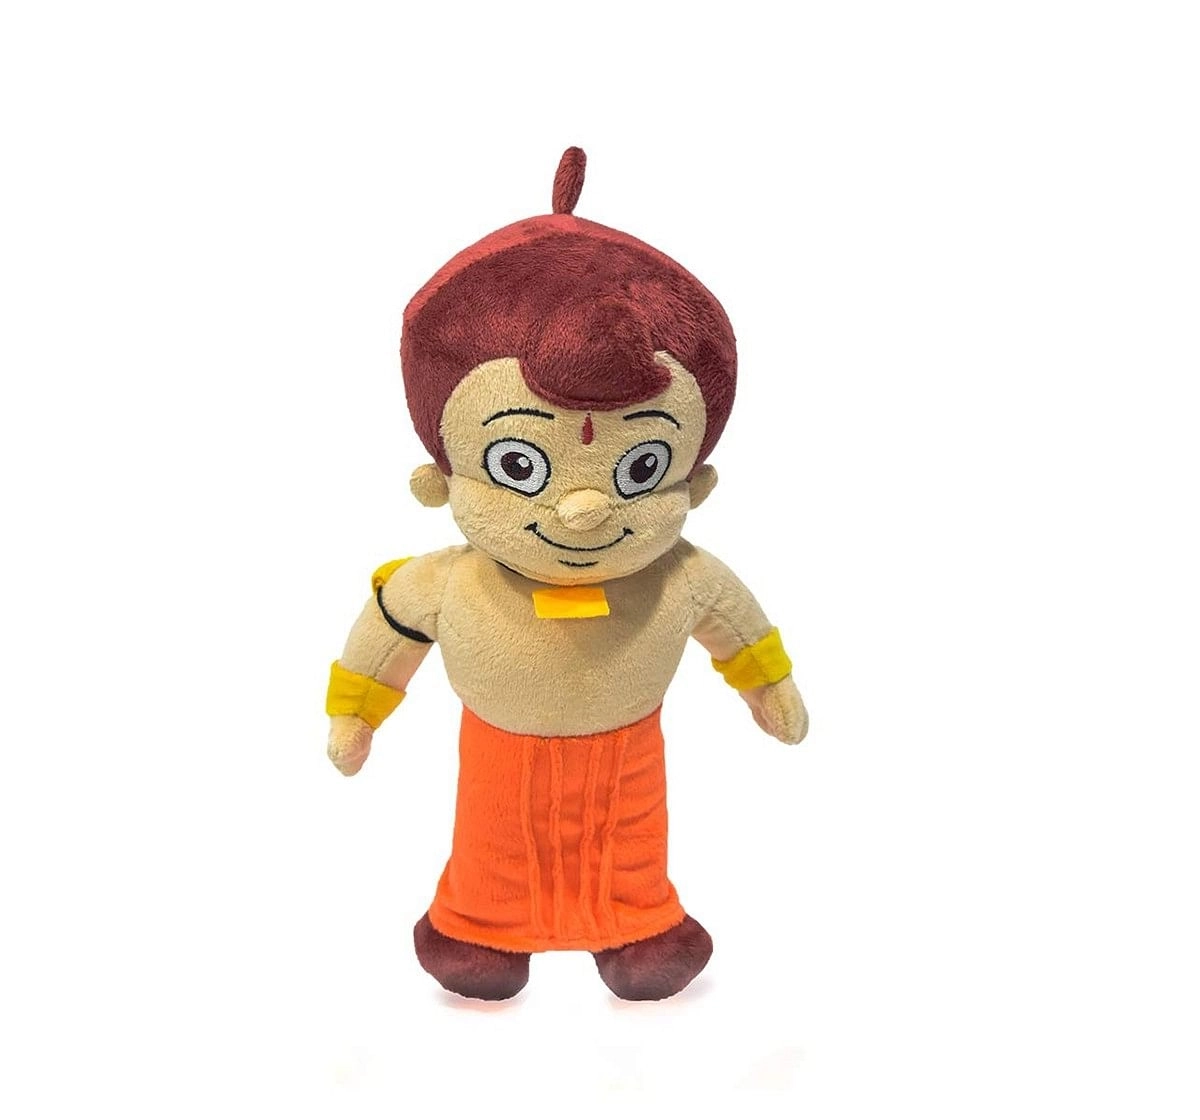  Chhota Bheem Dancing B/O Plush Toy Interactive Soft Toys for Kids age 2Y+ - 39 Cm 